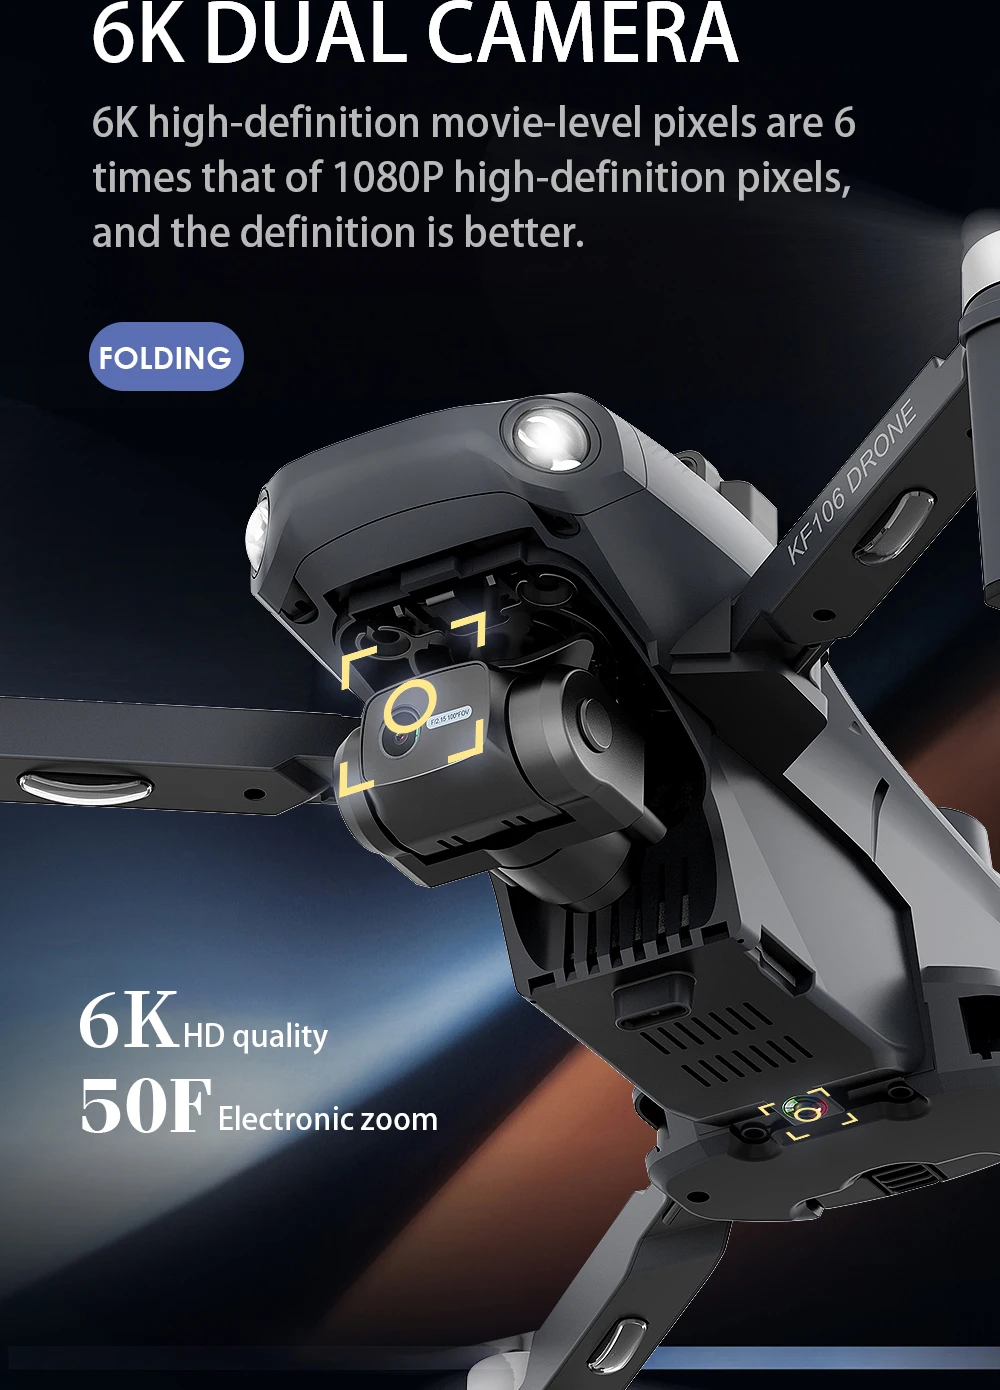 KFPLAN KF106 Drone, 6K DUAL CAMERA 6K high-definition movie-level pixels are